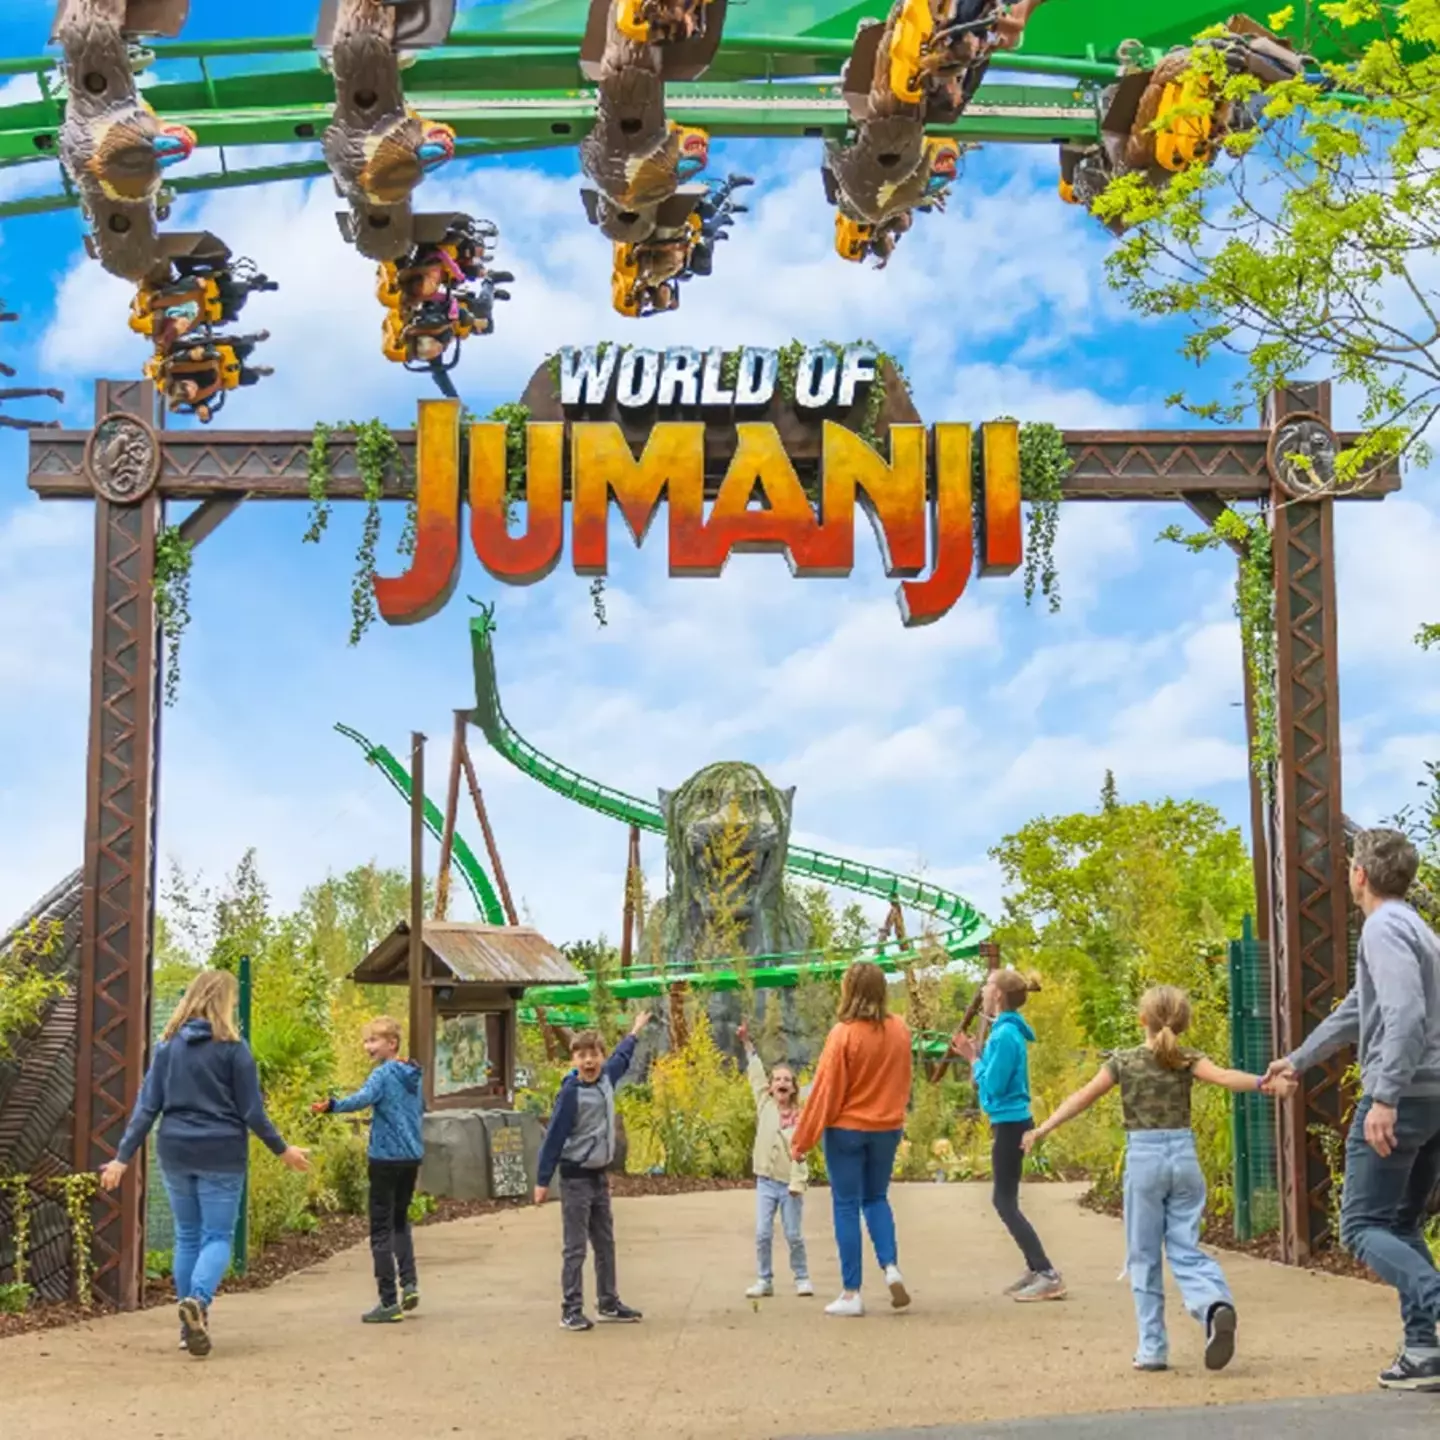 The World of Jumanji theme park cost £17 million to build.